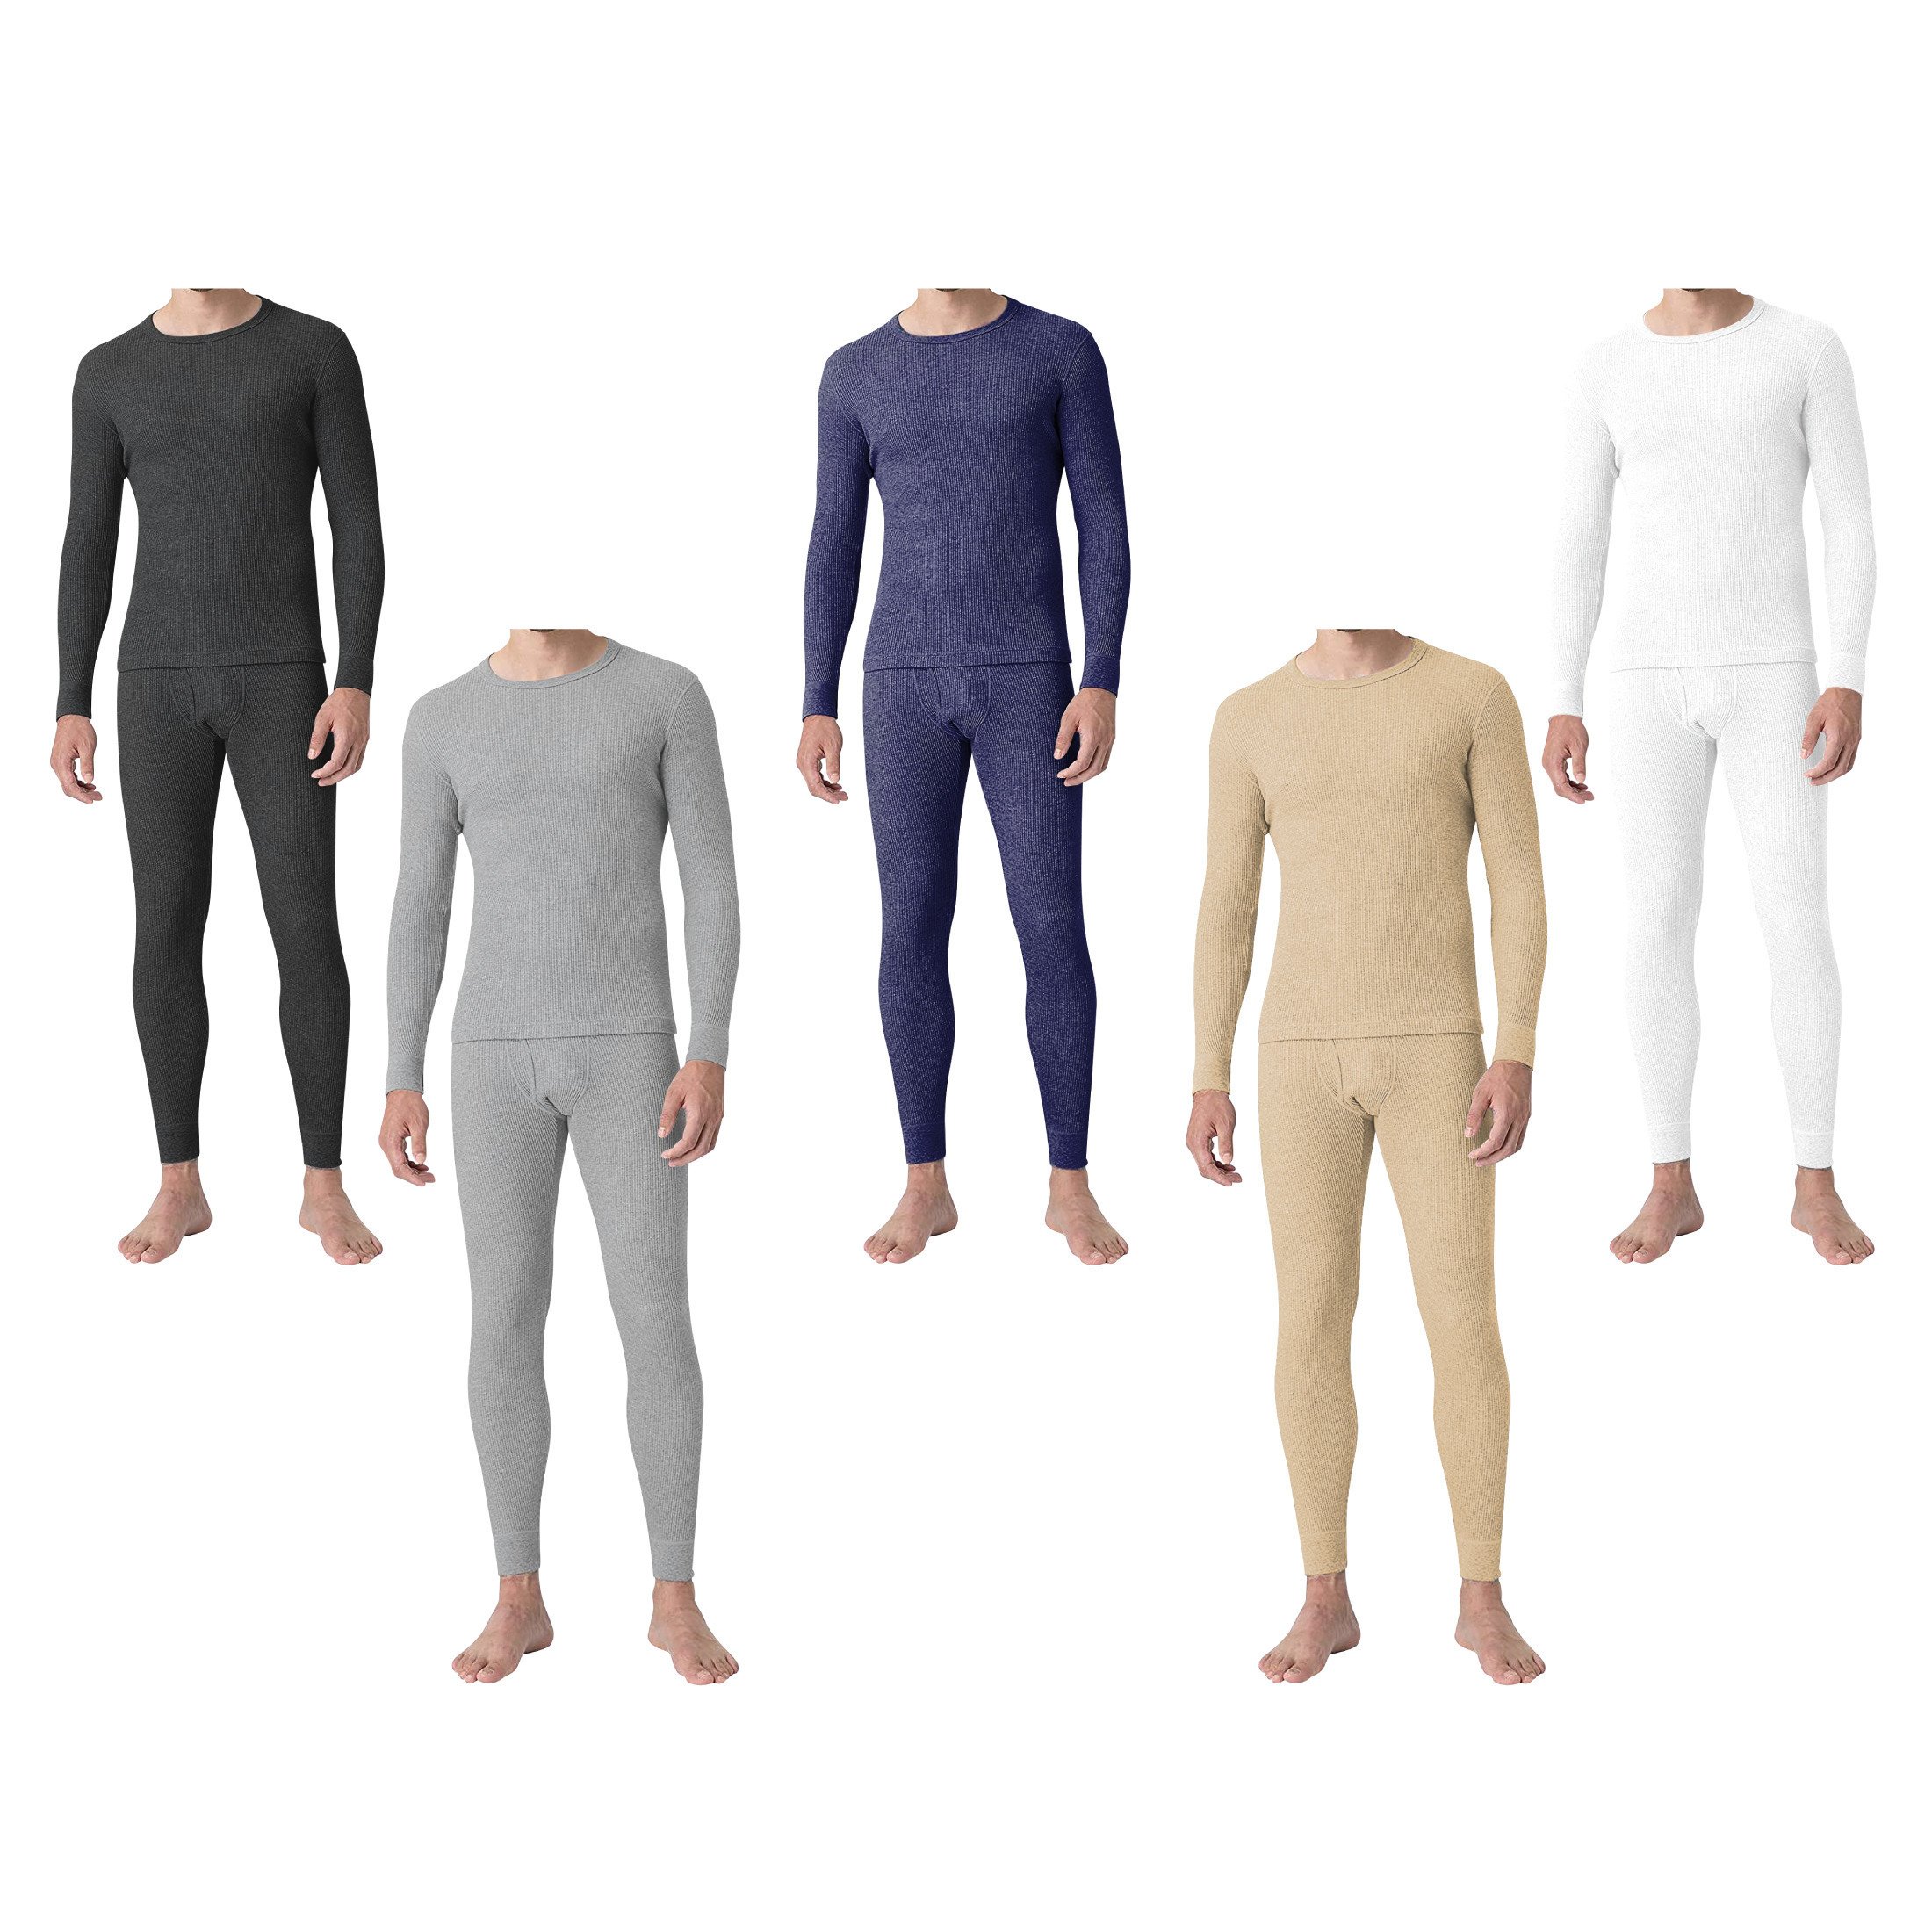 2-Sets: Men's Super Soft Cotton Waffle Knit Winter Thermal Underwear Set - Black & Grey, 2X-Large